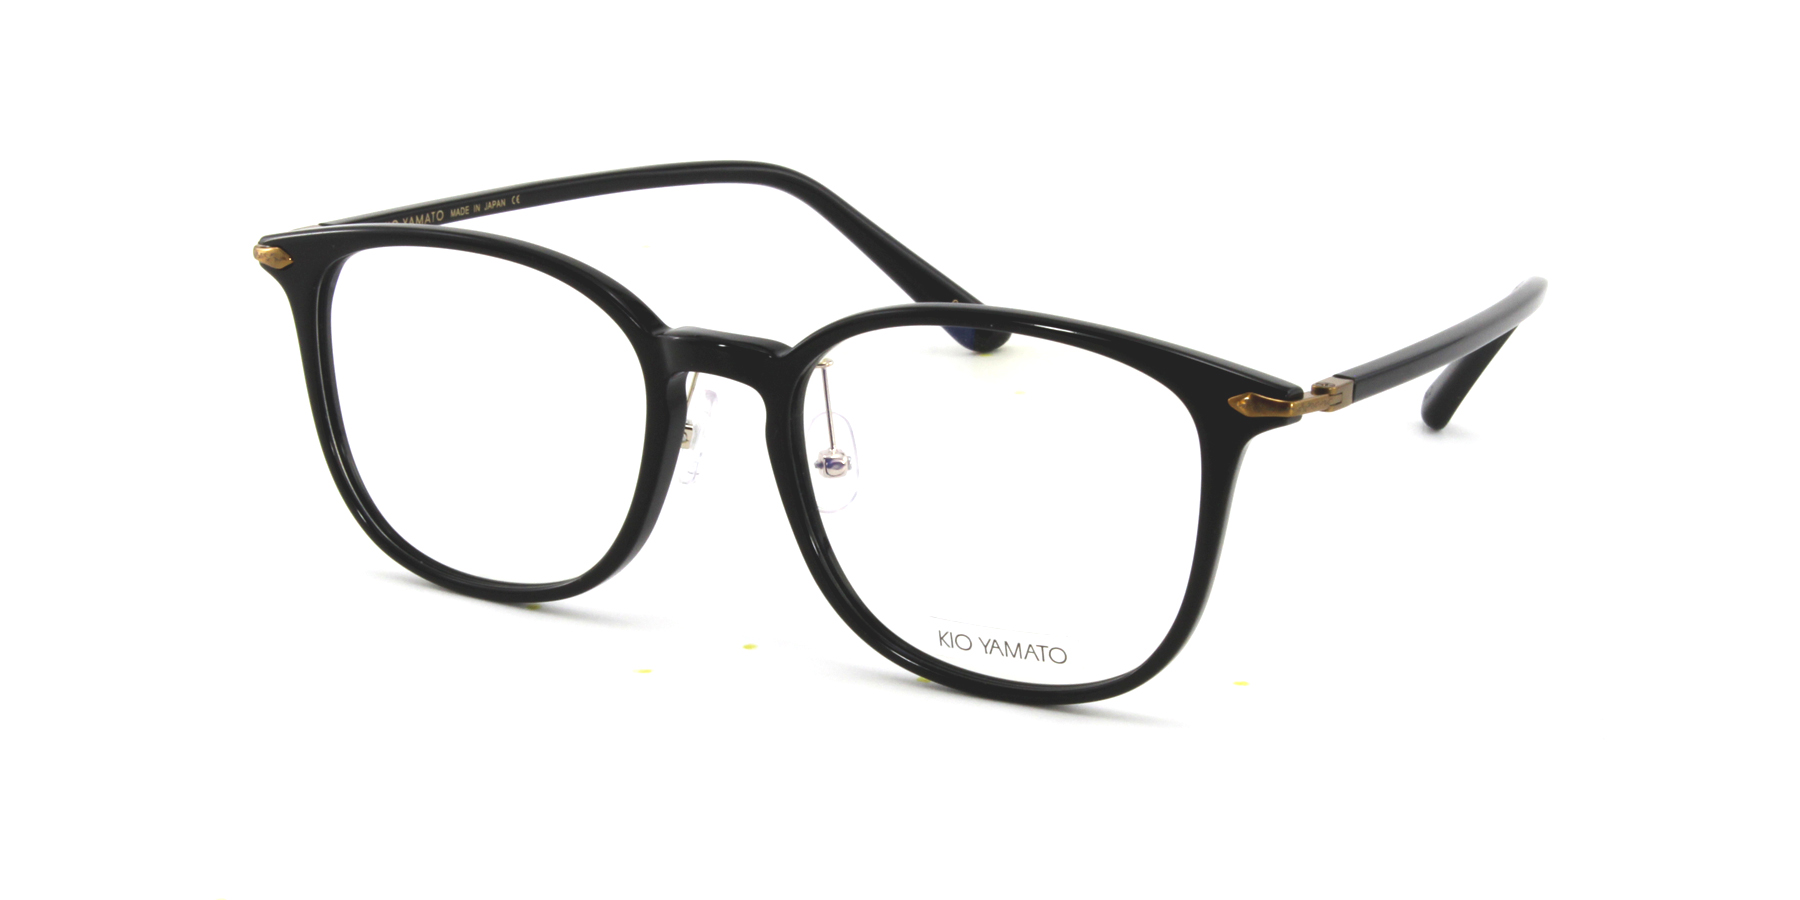 Shop Glasses Online - Parkside Eye Care, Cary, NC